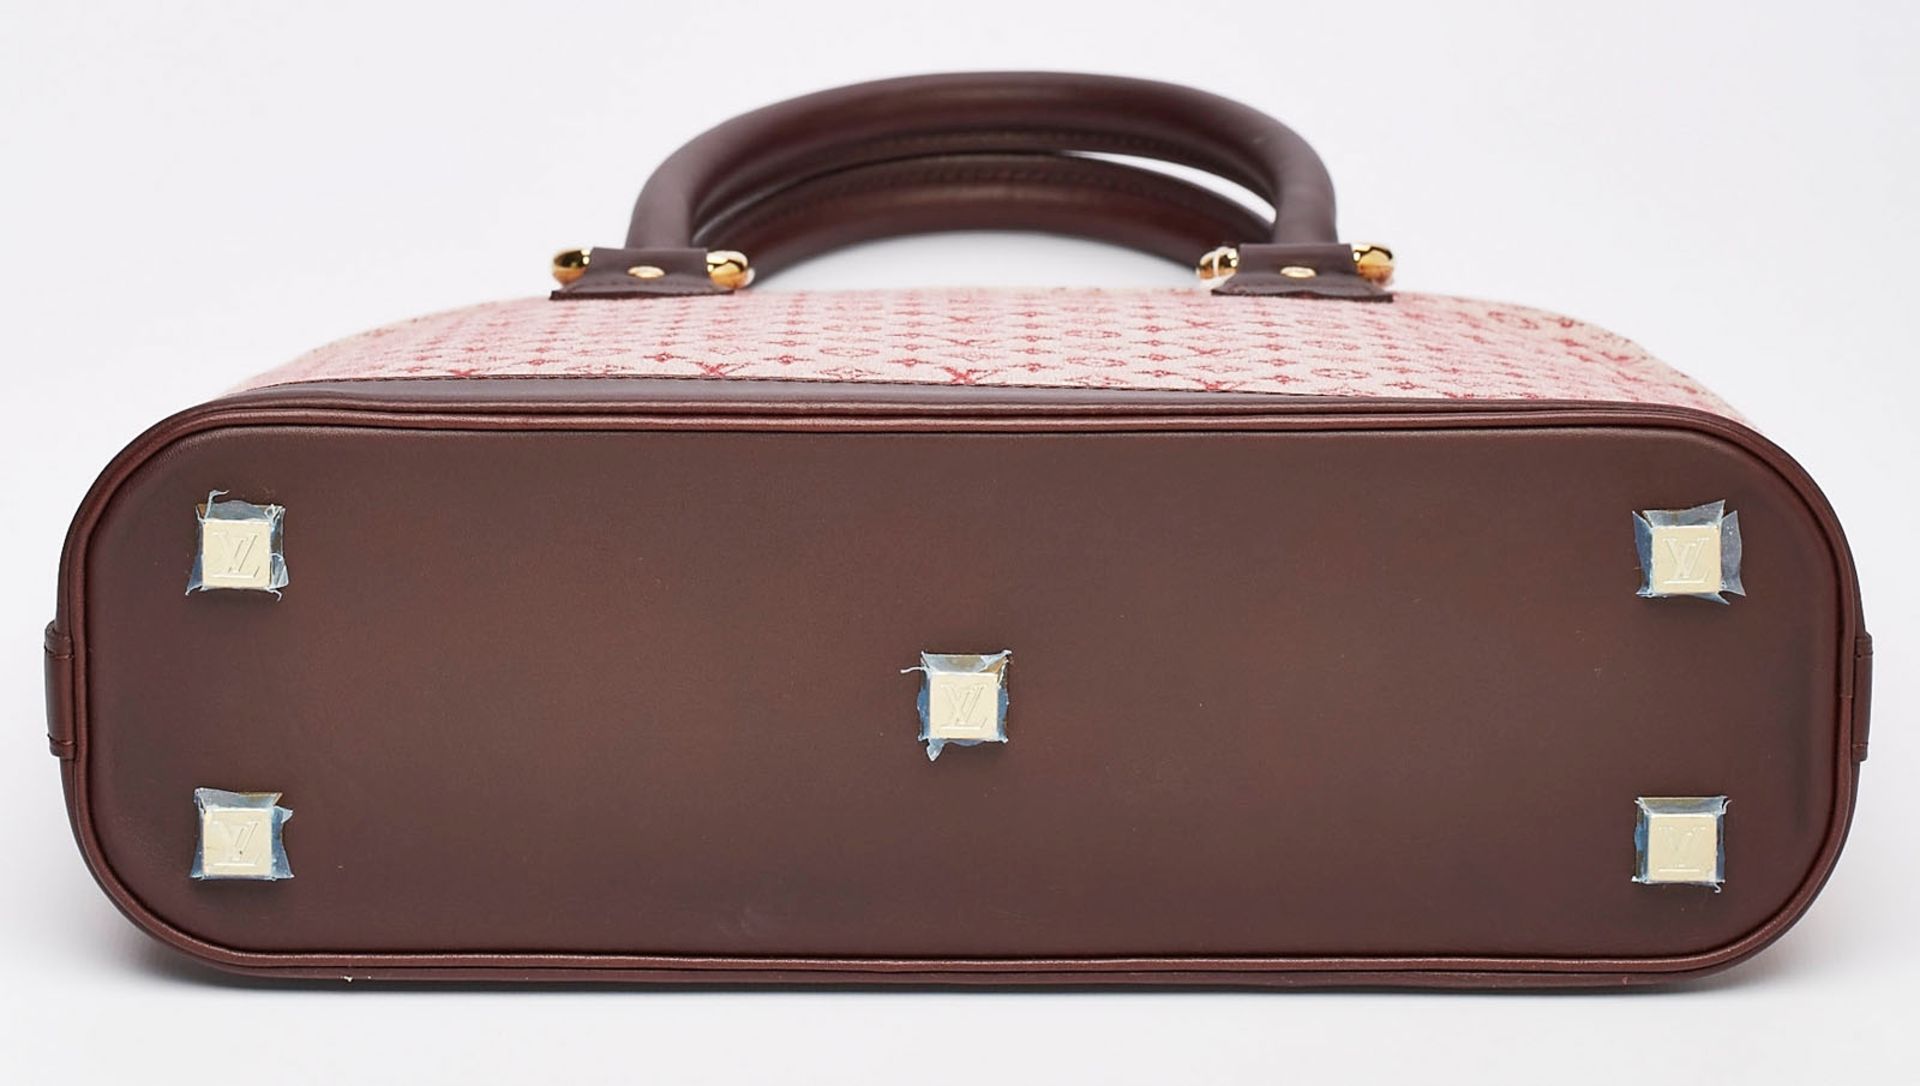 Handtasche "Mini Lin Alma Haute", Louis Vuitton um 2020. - Bild 2 aus 2